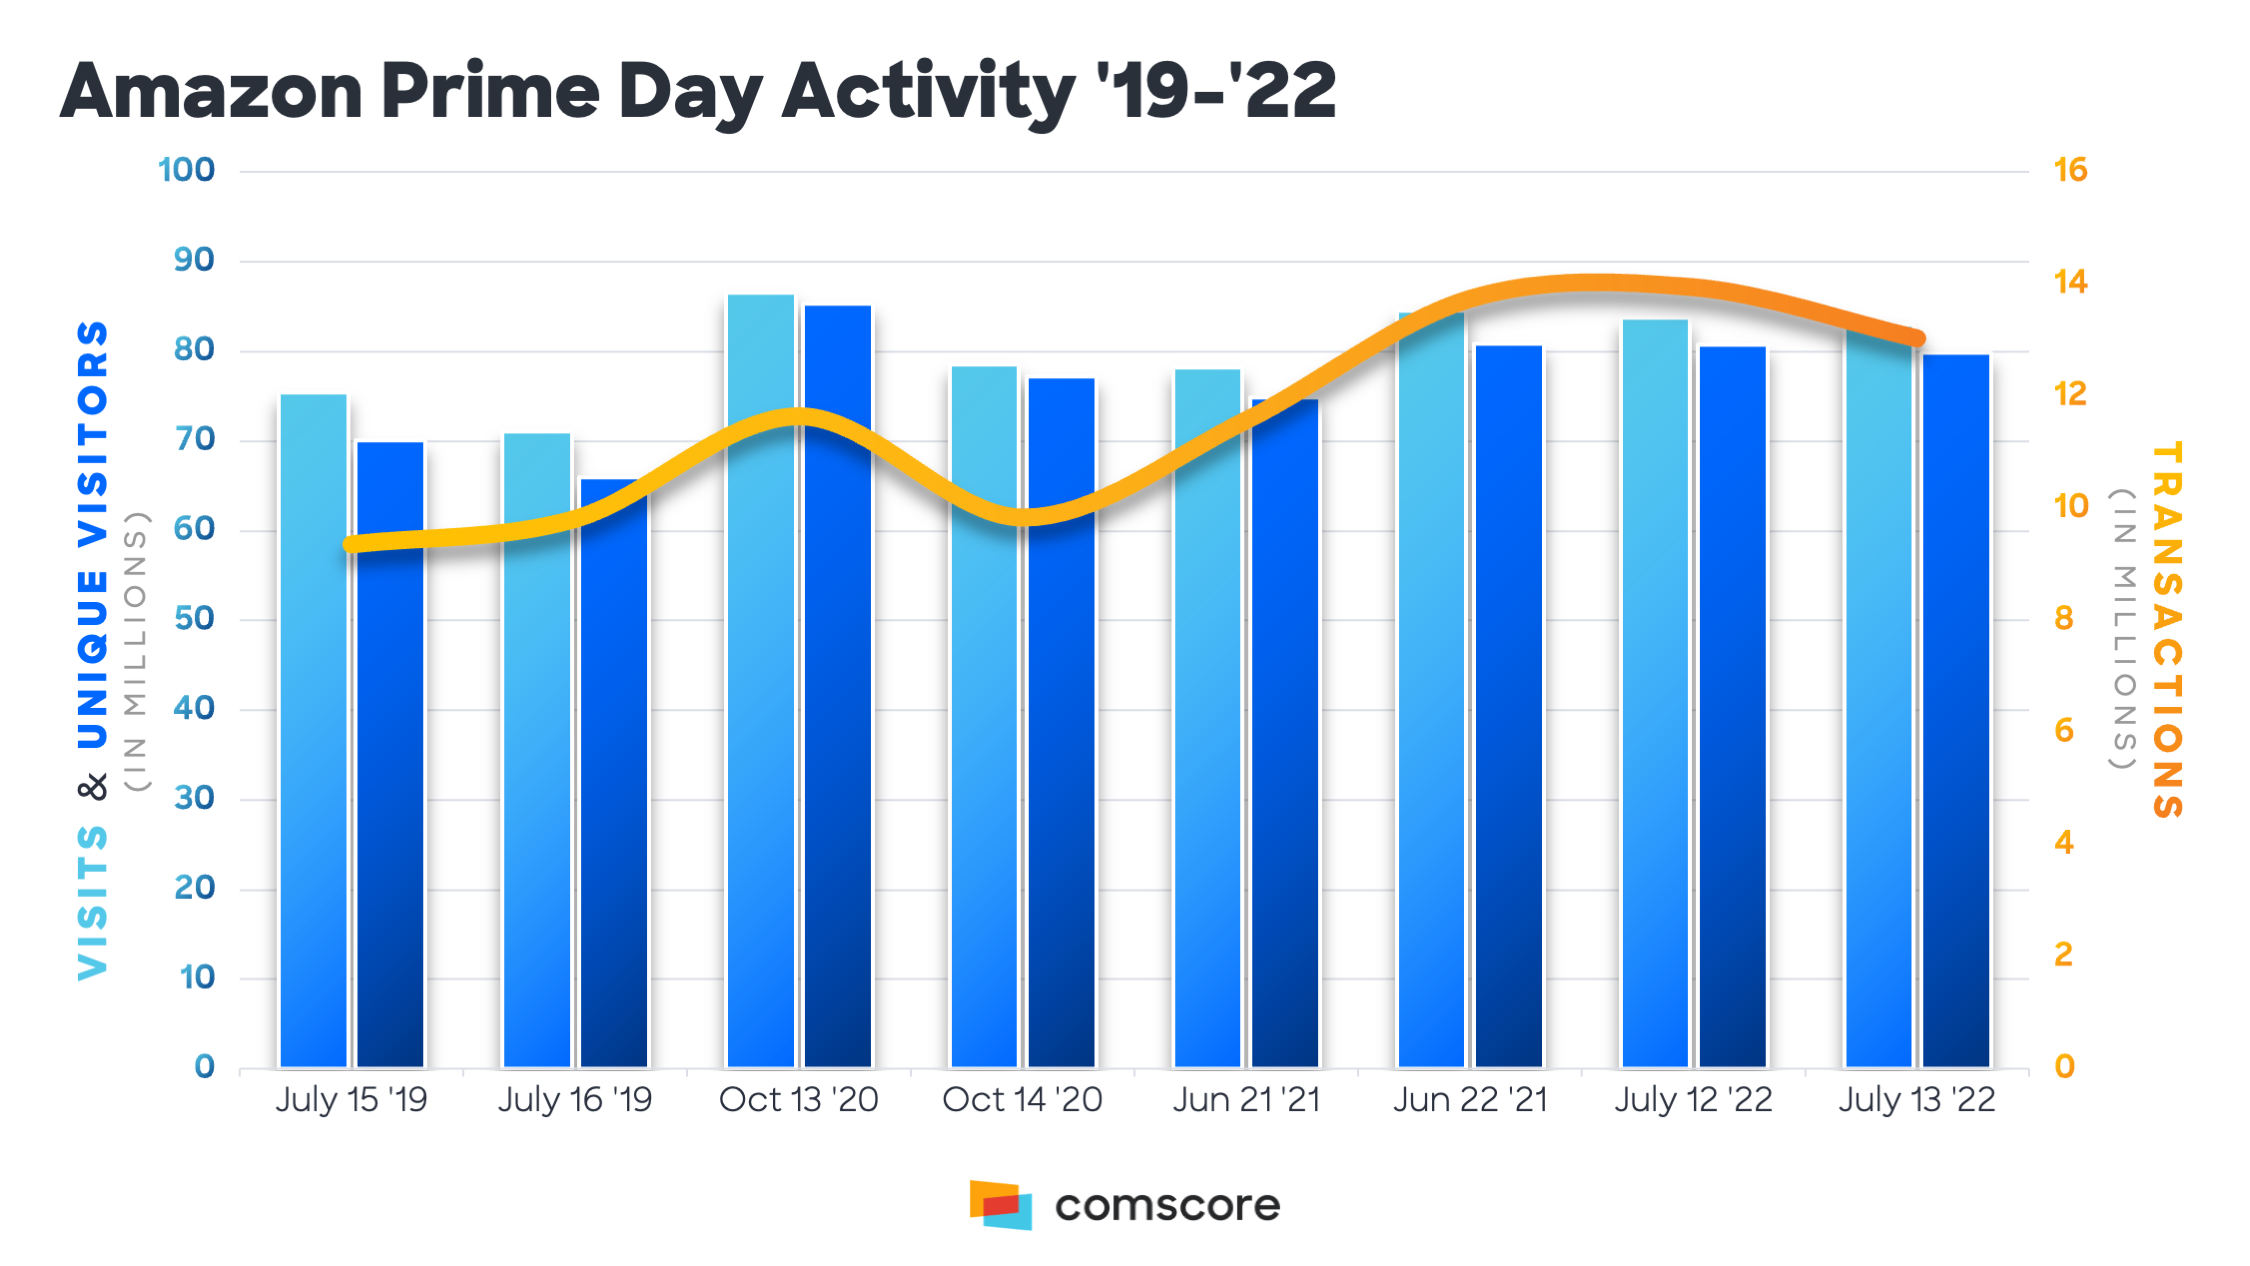 Comscore：社交媒体已经成为亚马逊Prime Day的重要参与渠道